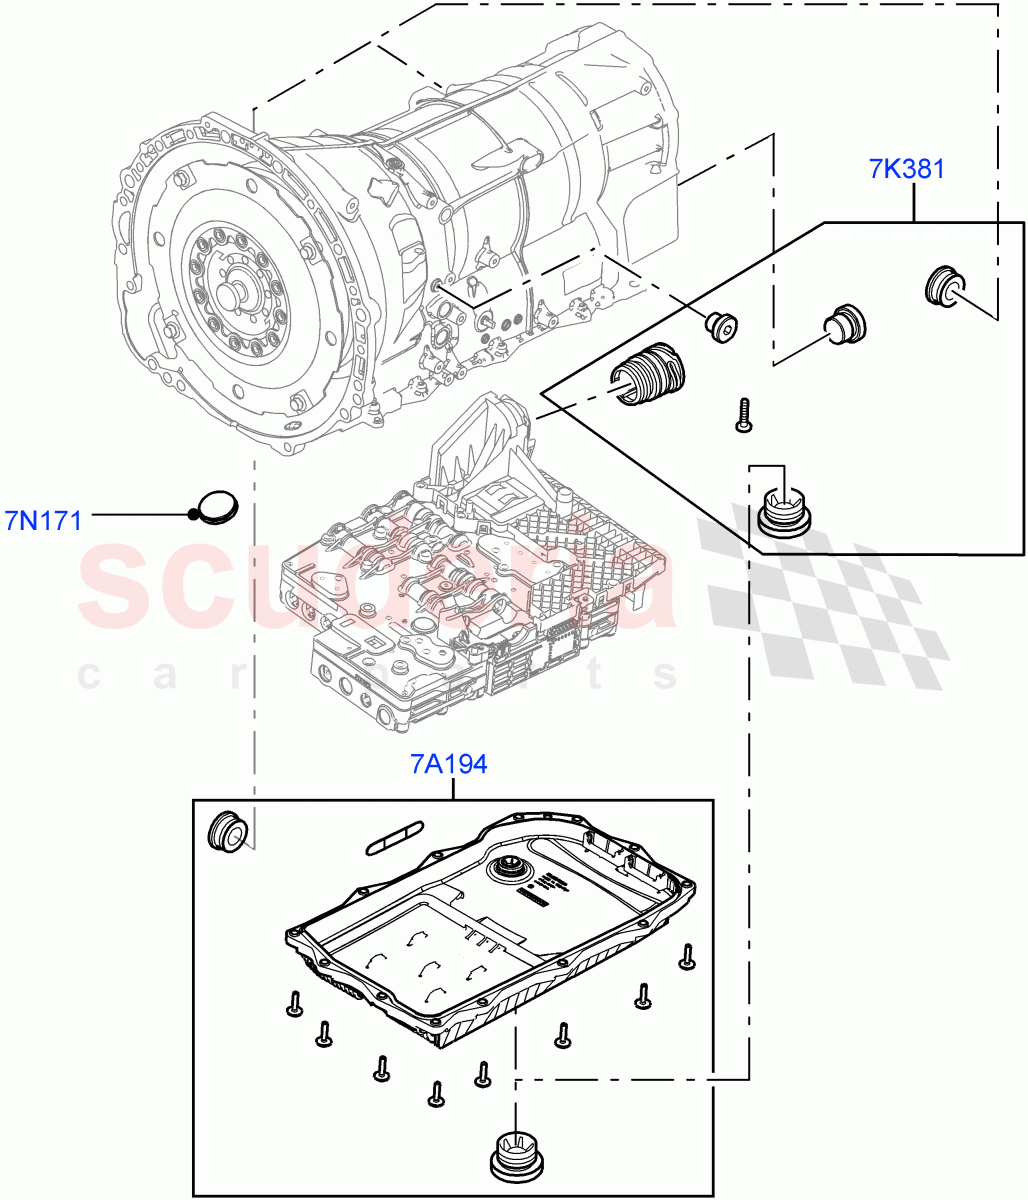 Transmission External Components(5.0L P AJ133 DOHC CDA S/C Enhanced,8 Speed Auto Trans ZF 8HP70 4WD)((V)FROMKA000001) of Land Rover Land Rover Range Rover Velar (2017+) [2.0 Turbo Petrol AJ200P]